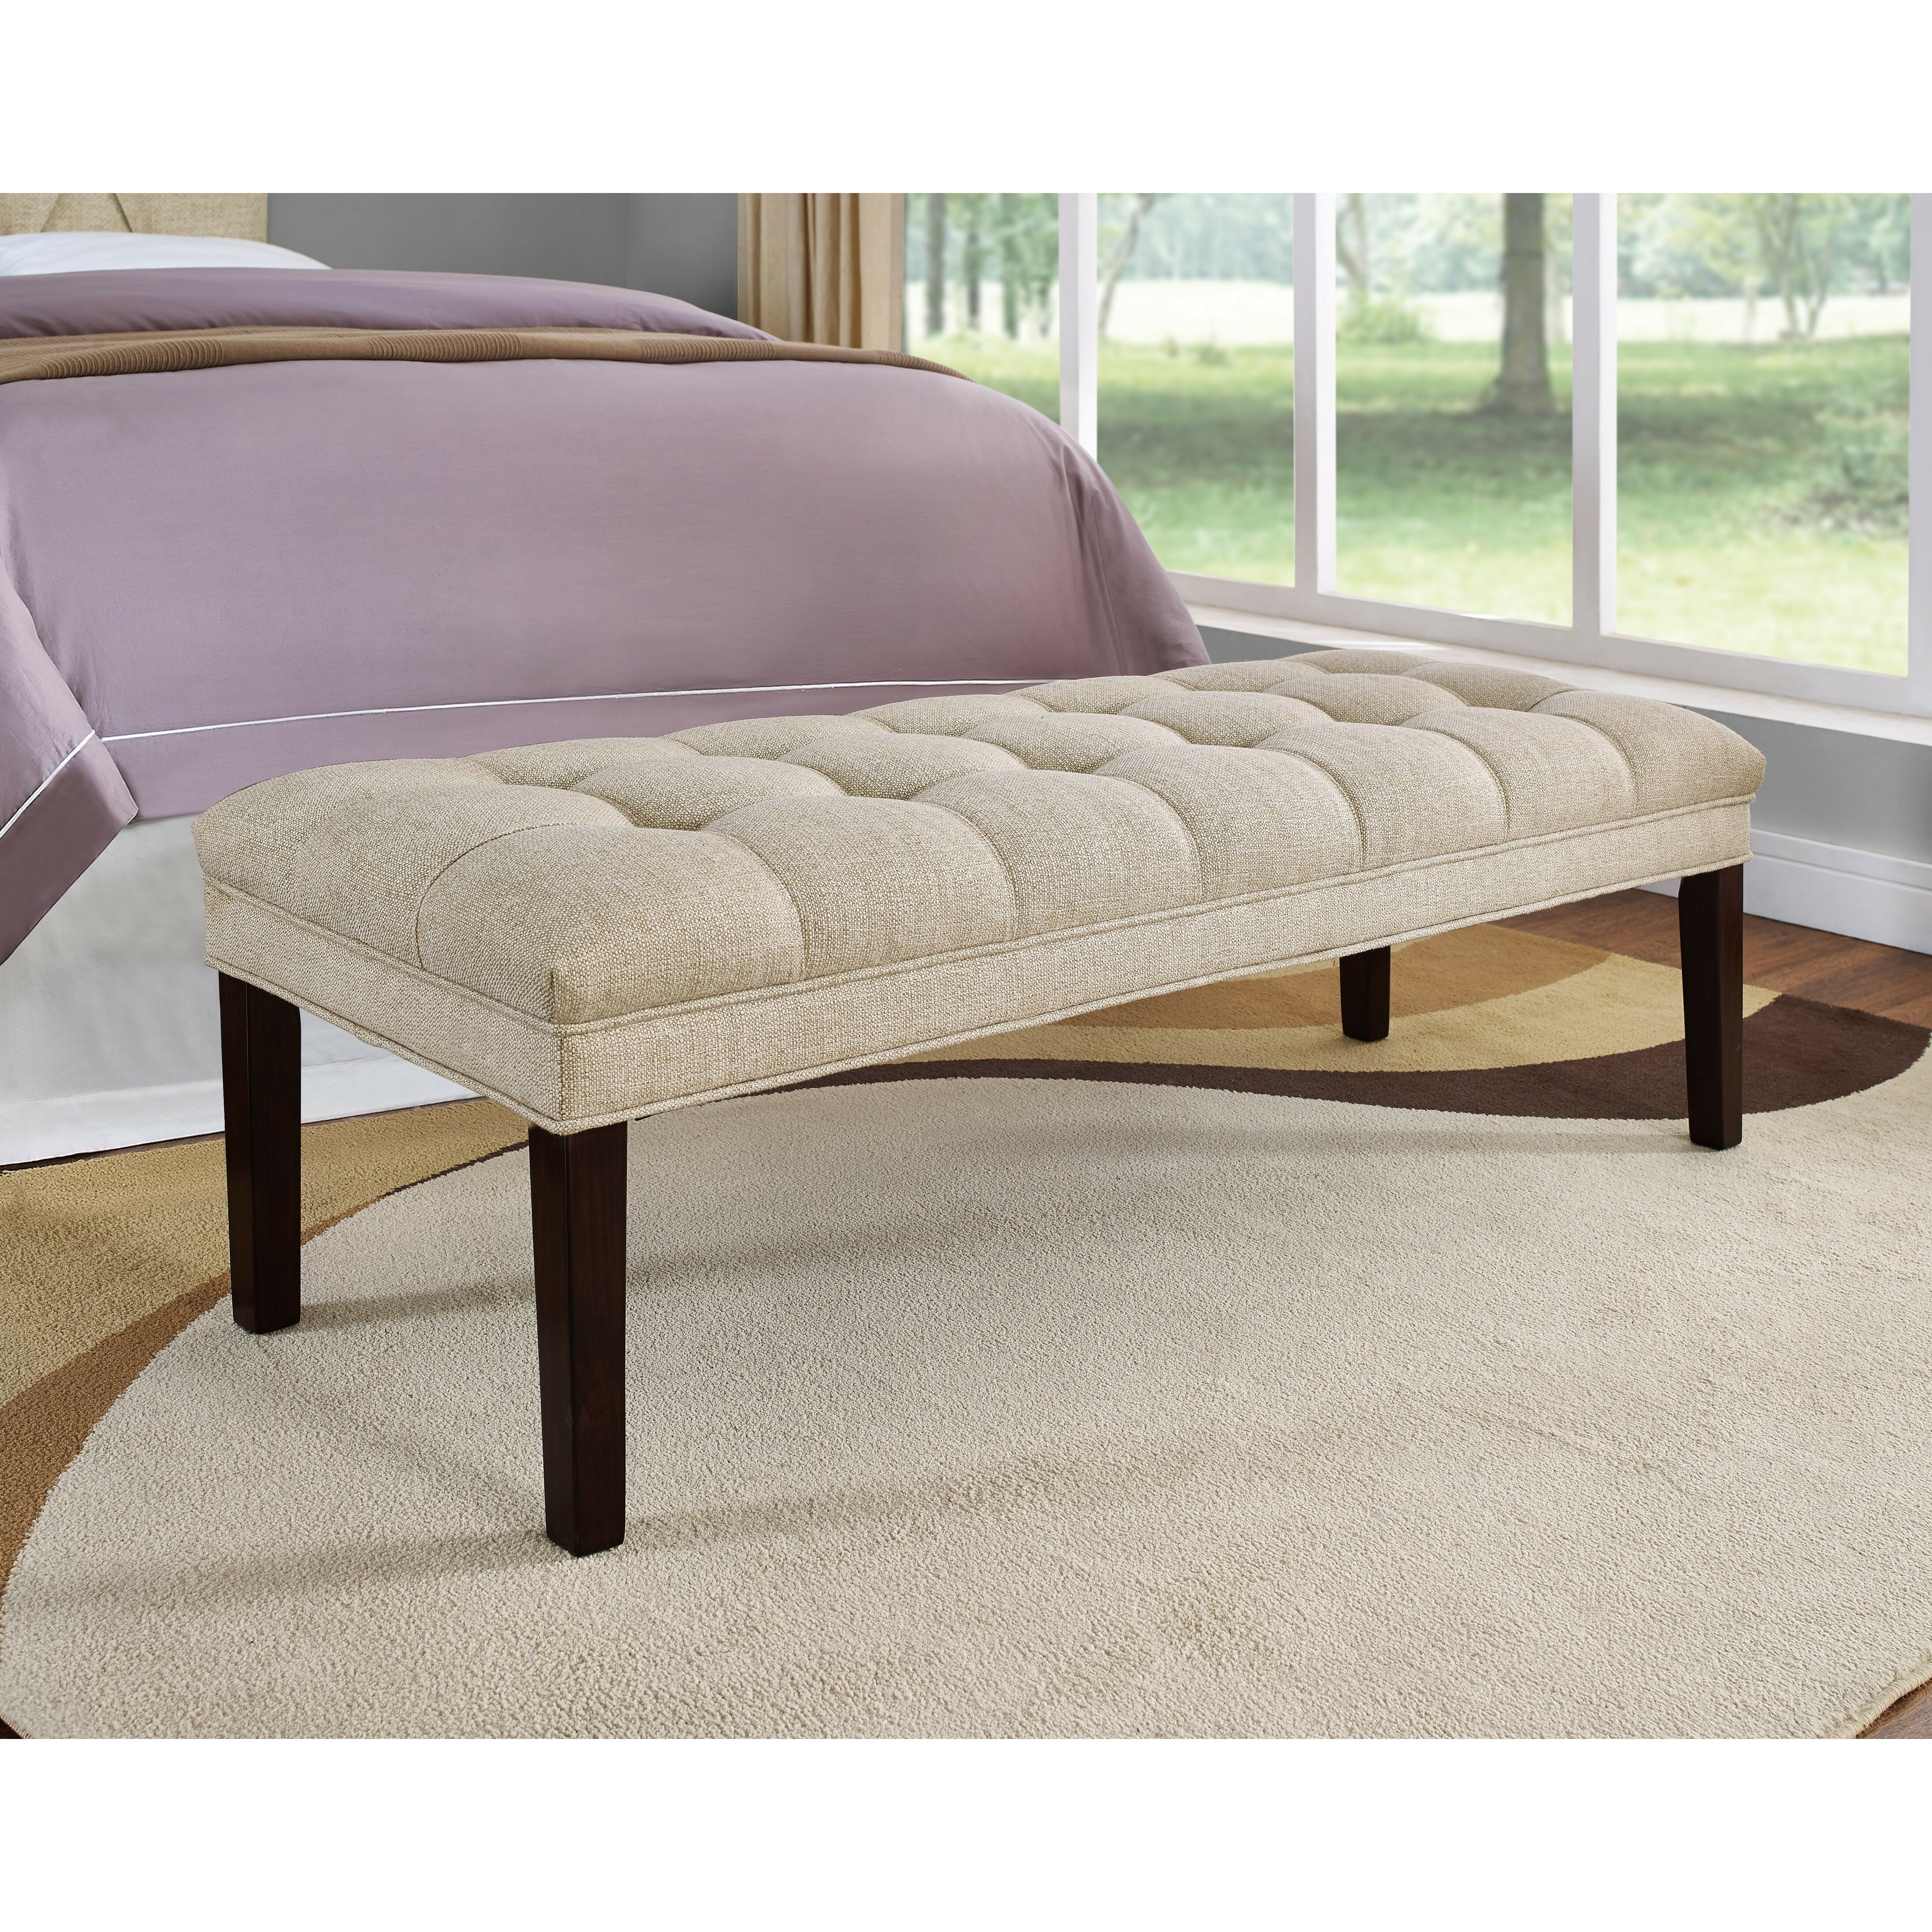 Upholstered bedroom bench uk